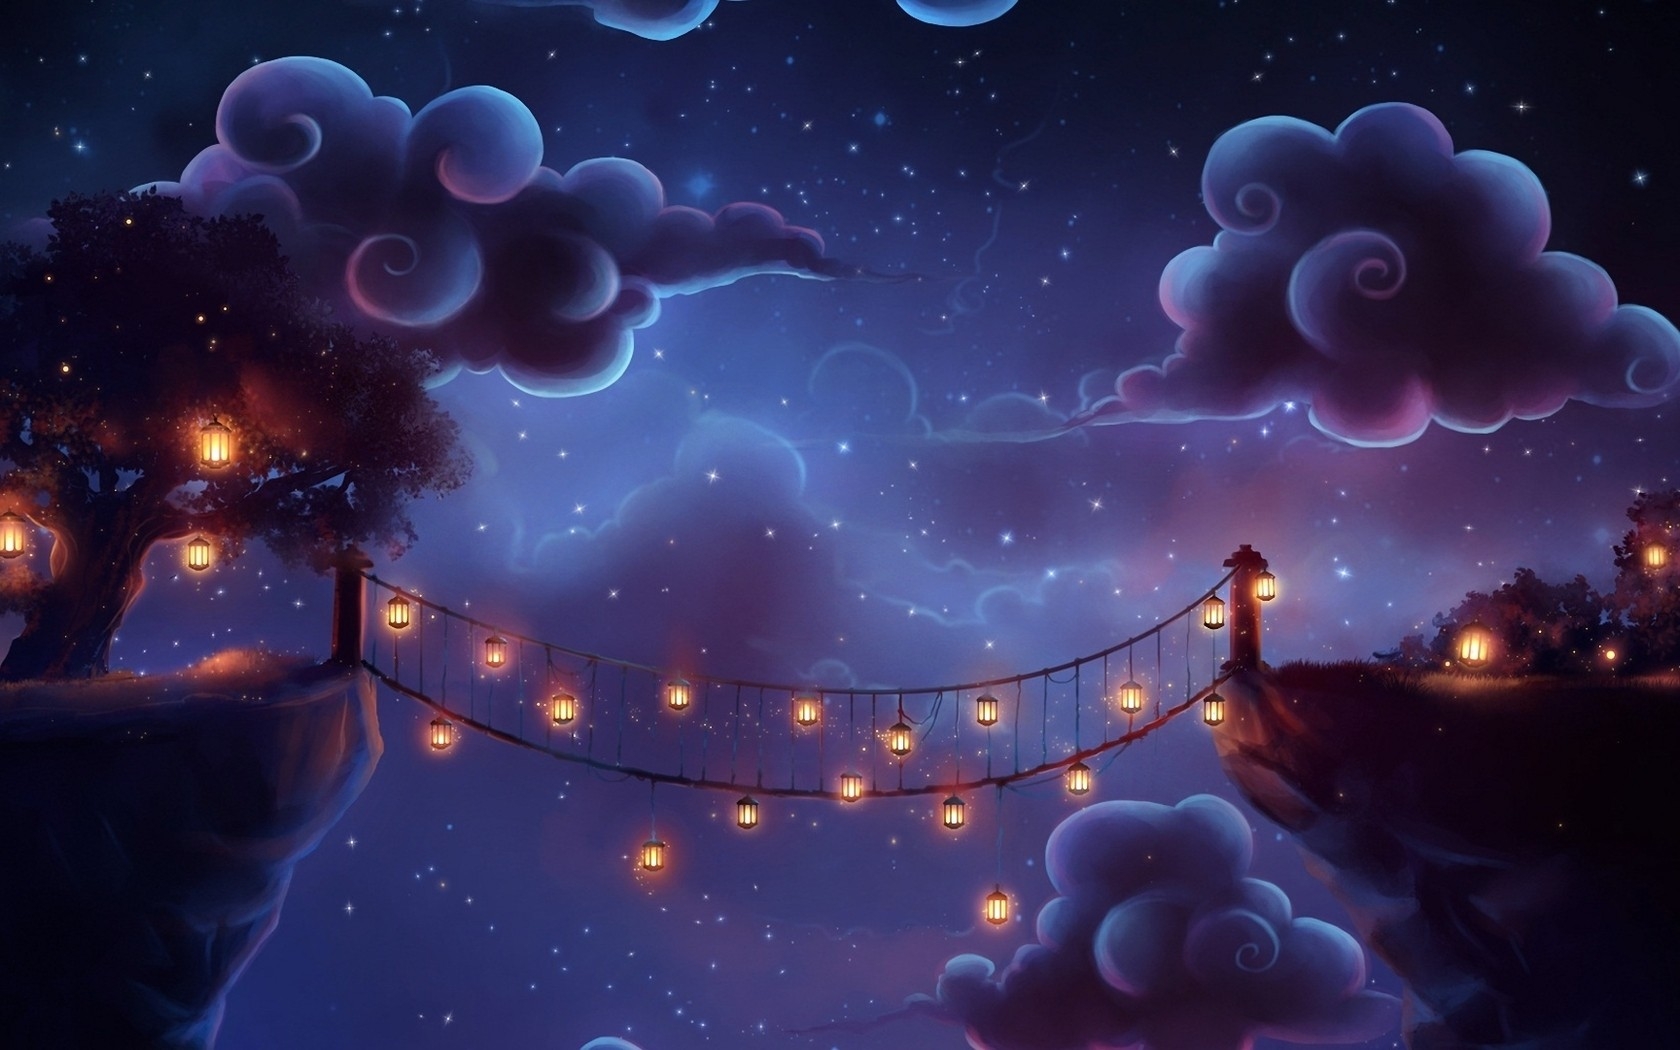 Download Wallpaper, Download abstract clouds night bridges animated cartoonish 1680x1050 wallpaper Wallpaper –Free Wallpaper Download